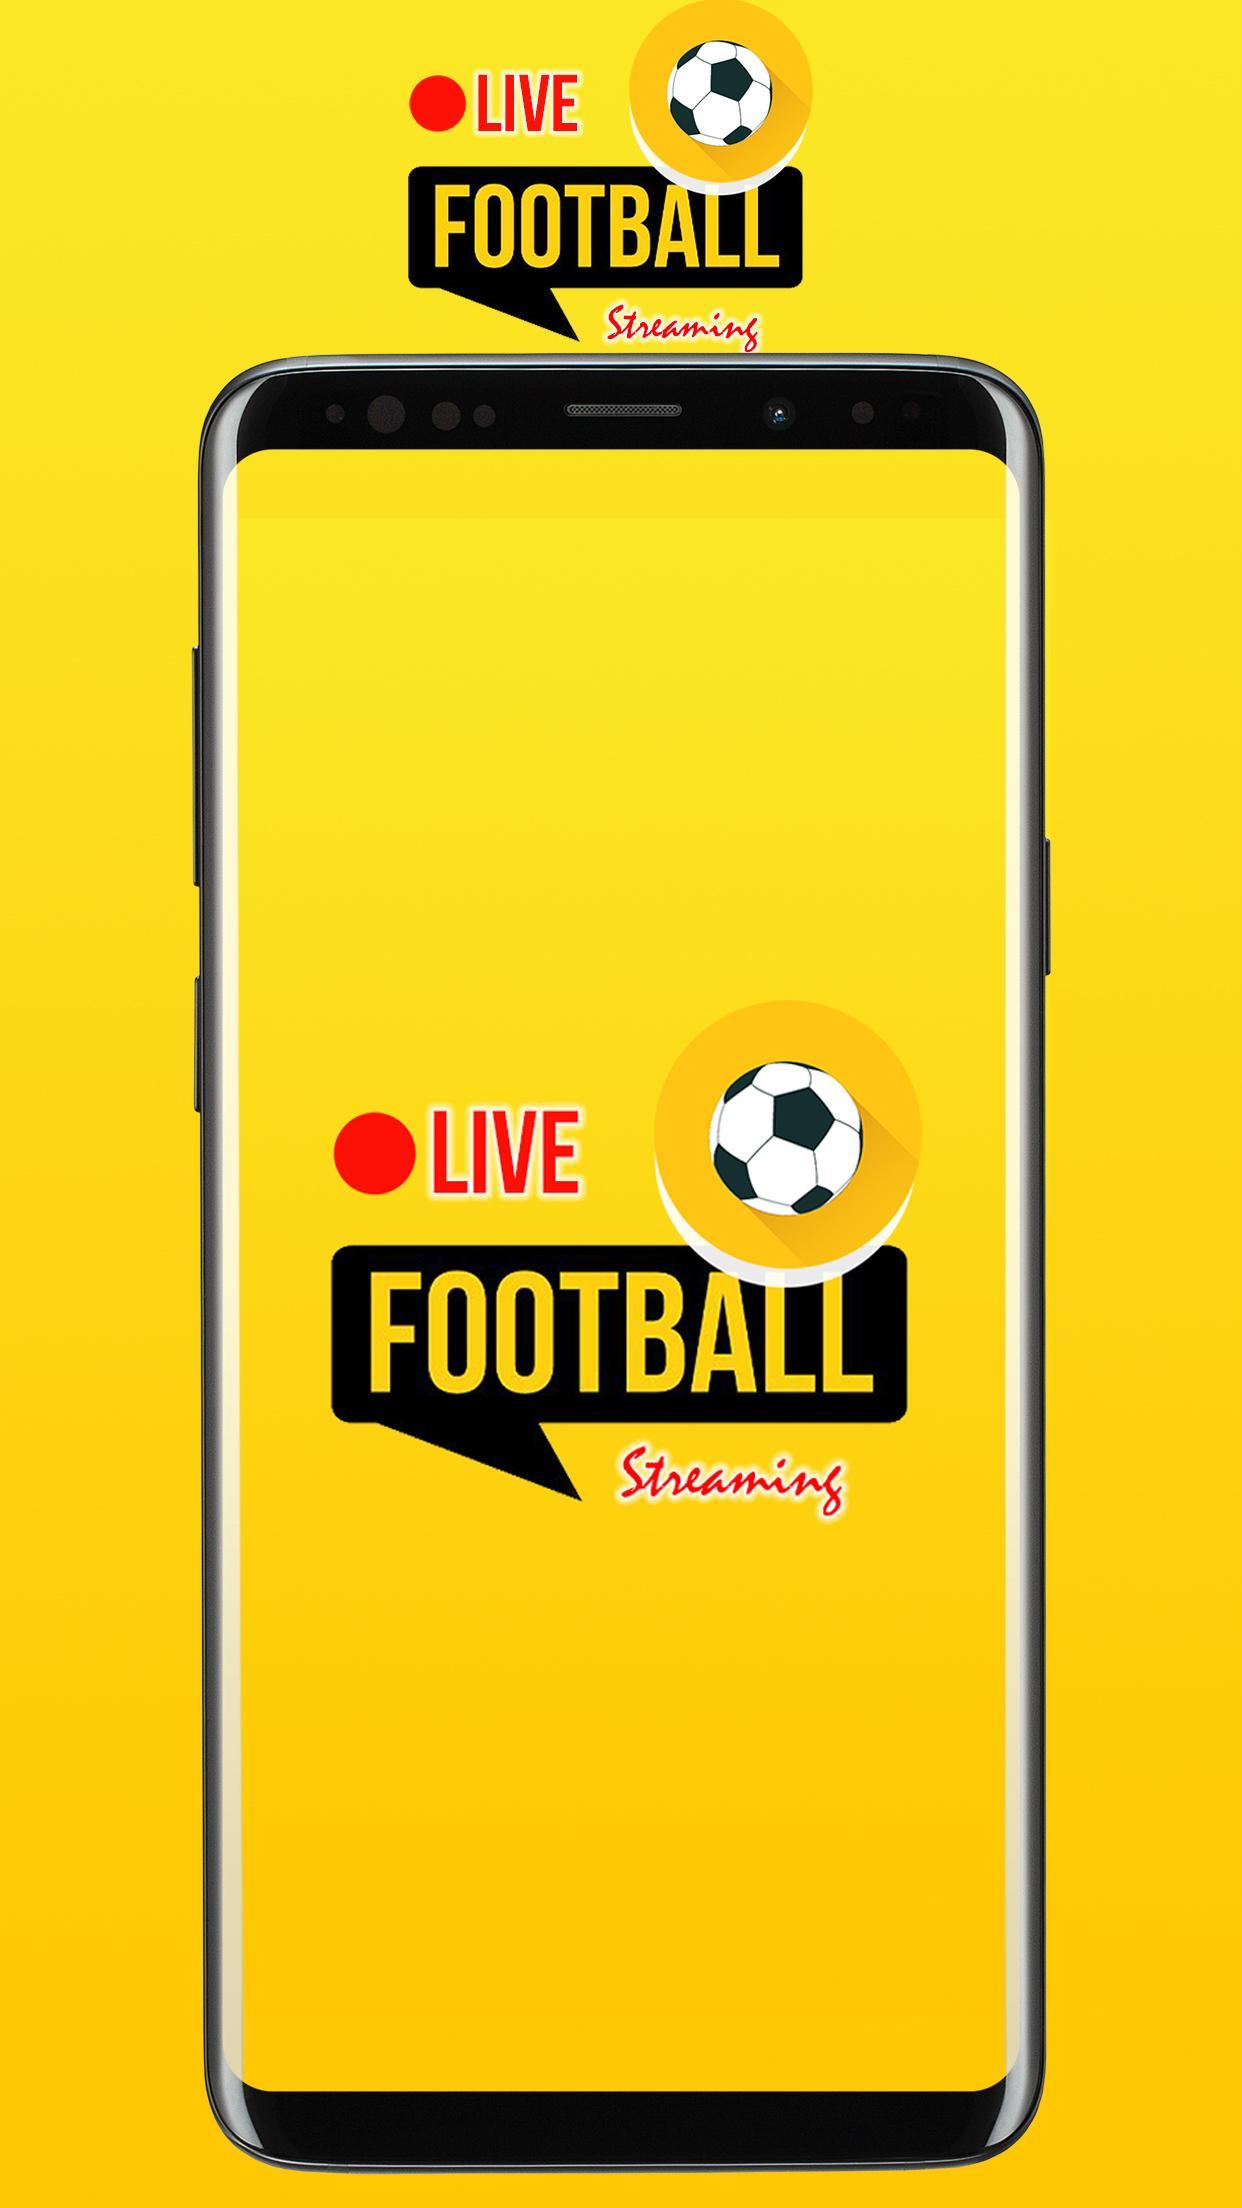 57 Best Images Live Football On Tv Bbc - BBC Radio 5 live - 5 Live Sport, Champions League Football ...